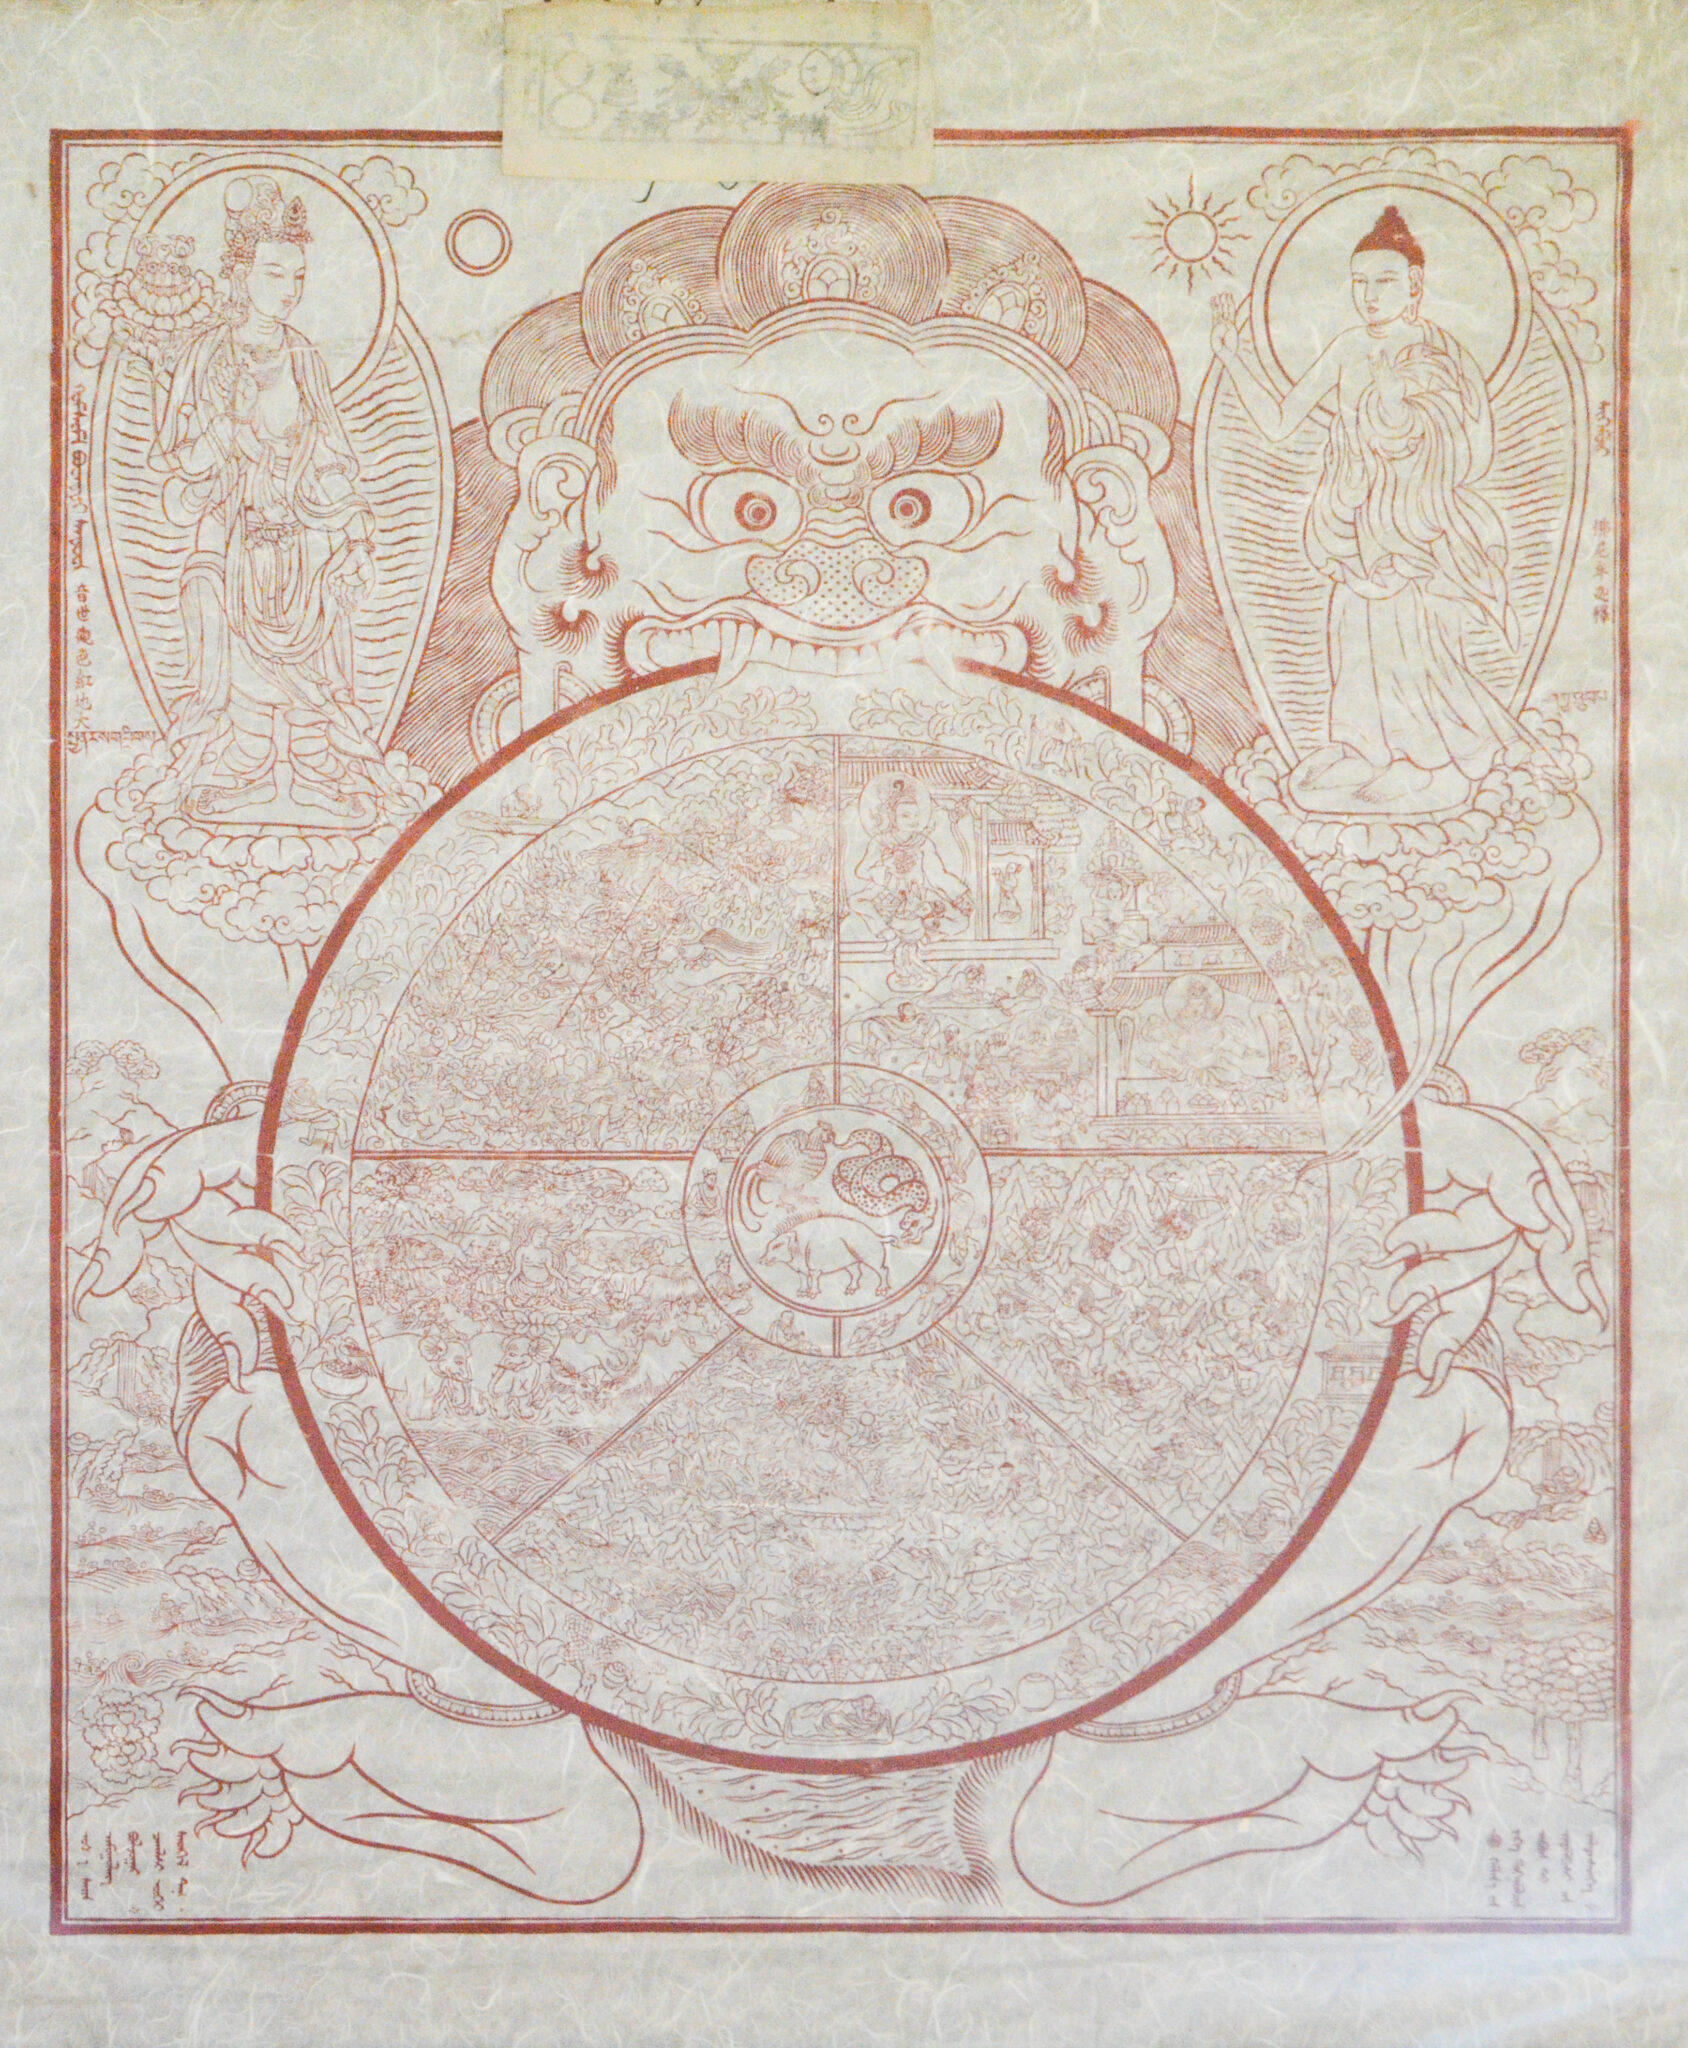 Line drawing in red depicting wheel divided into multiple scenes held in teeth by wrathful deity